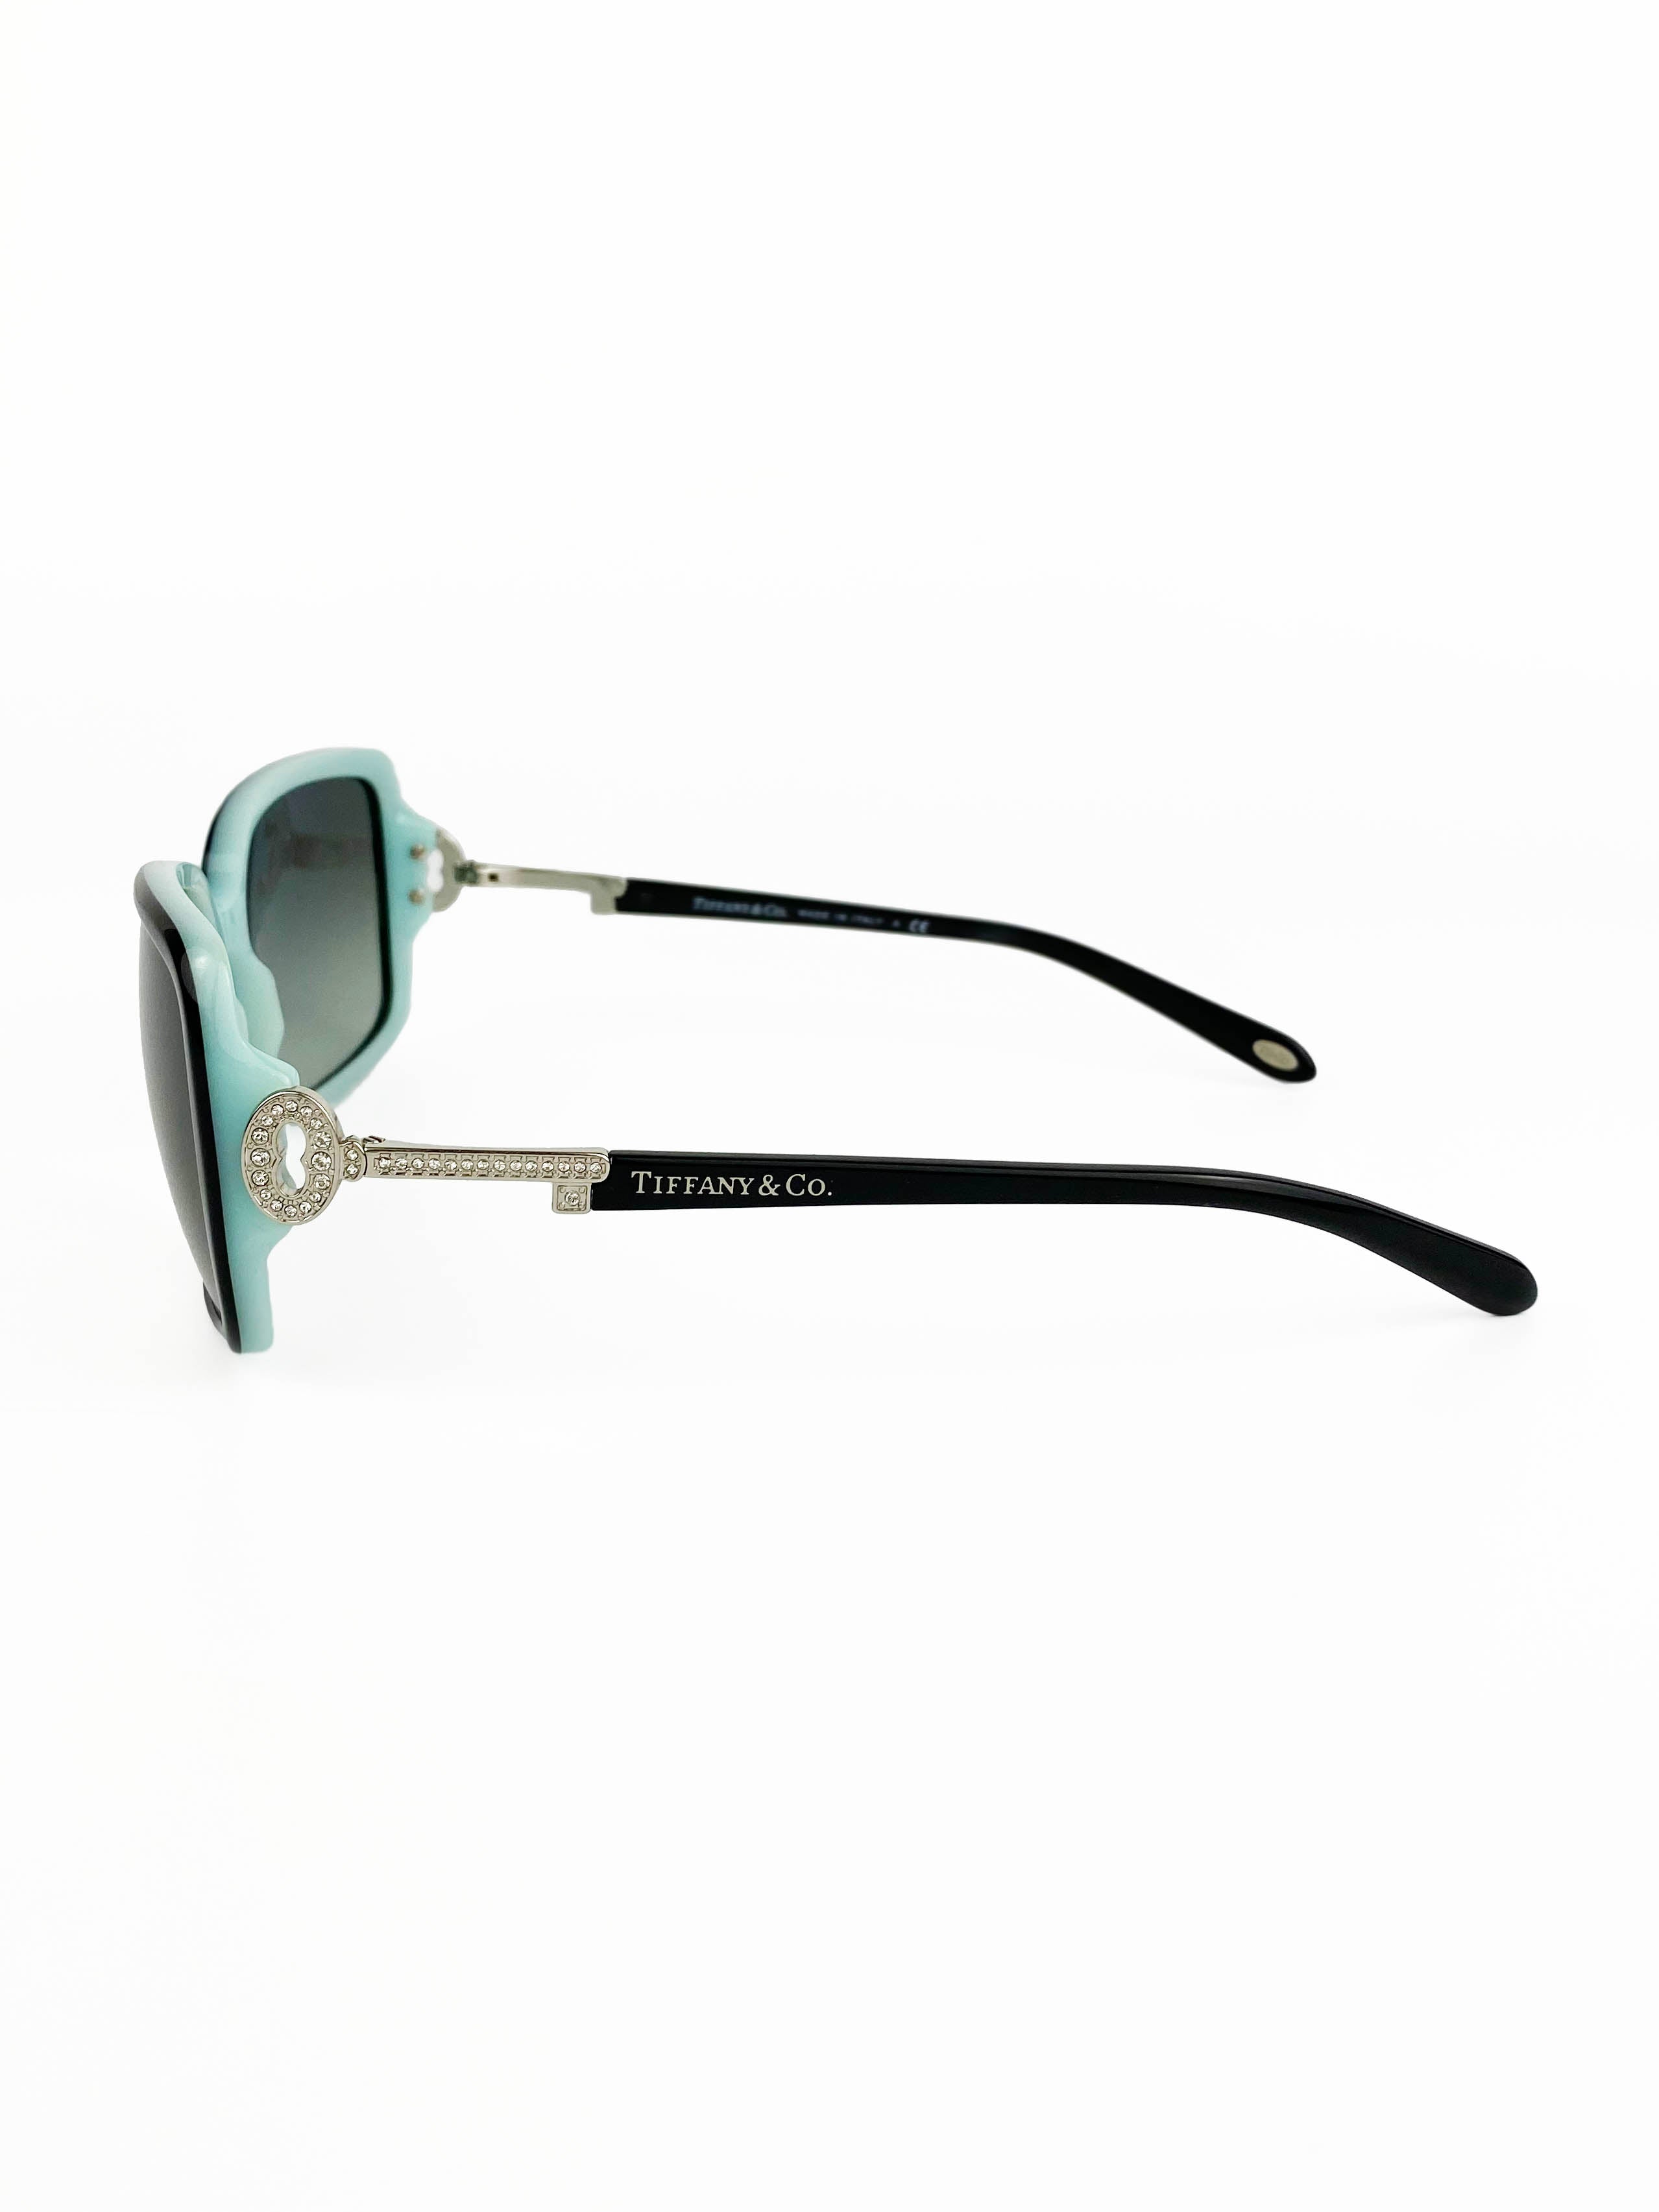 tiffany-sunglasses-4.jpg